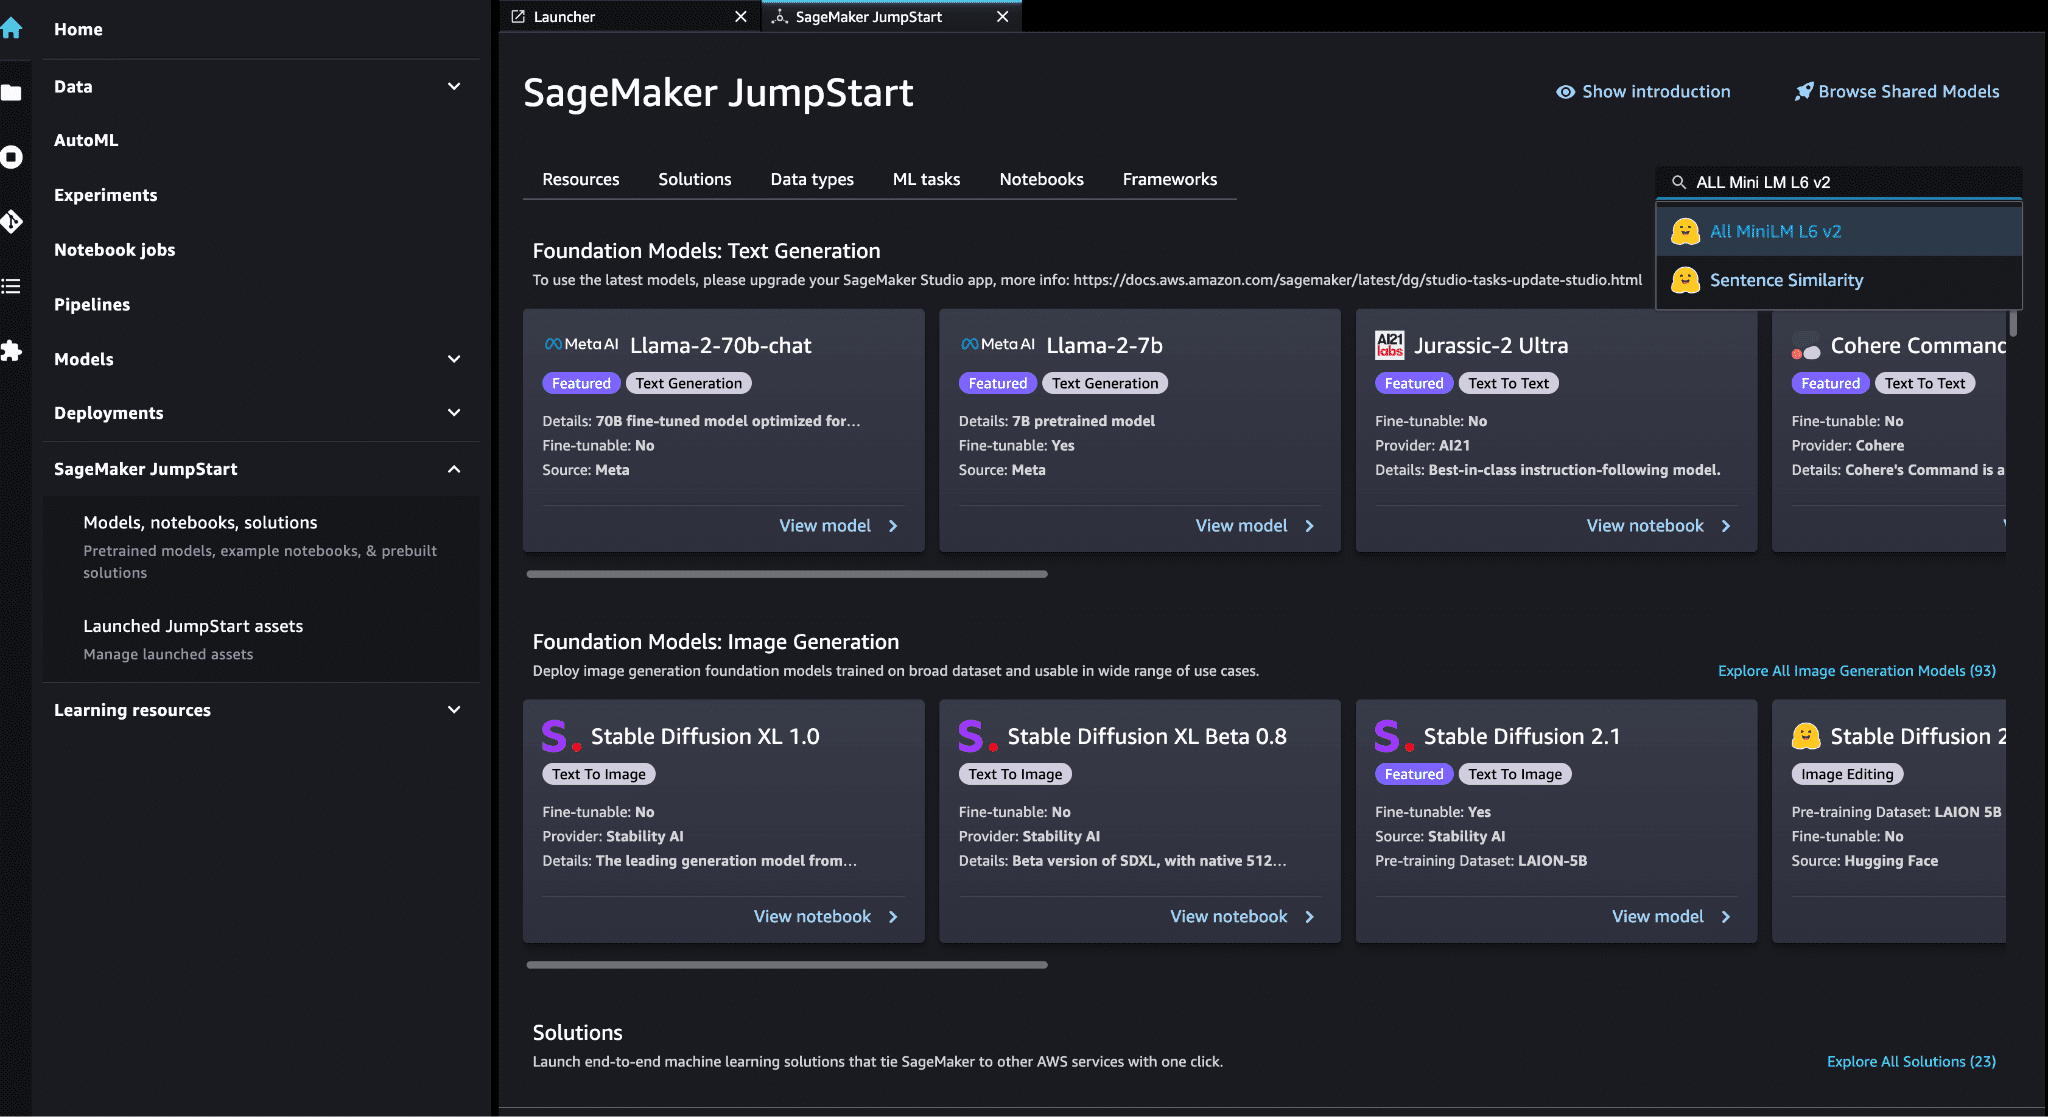 SageMaker JumpStart Models, notebooks, solutions